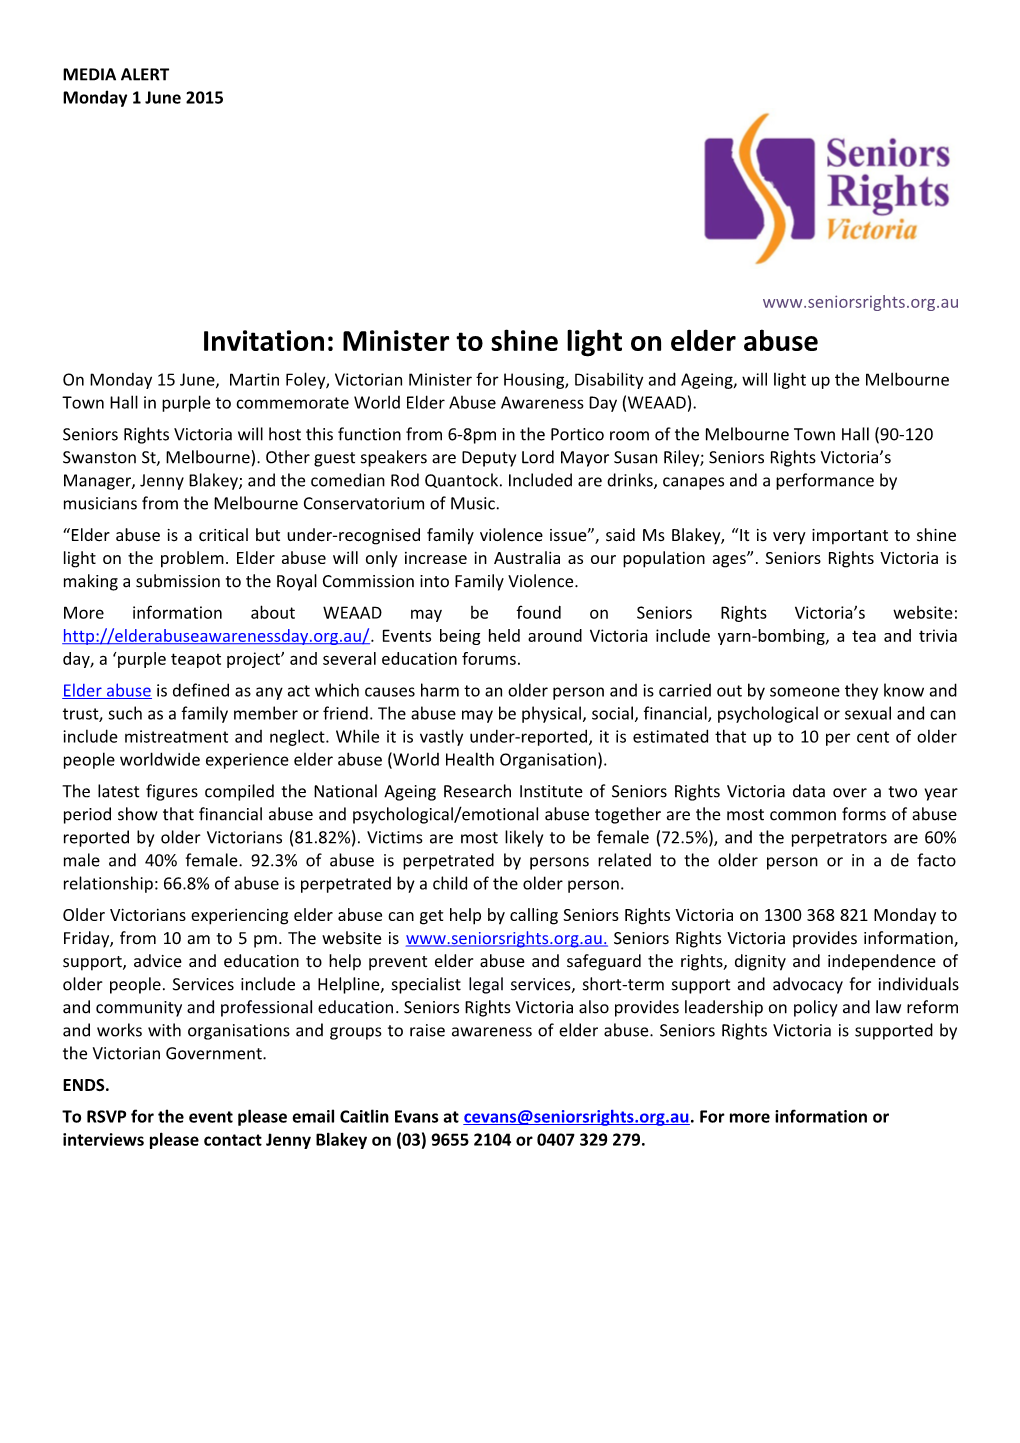 Invitation: Minister to Shine Light on Elder Abuse